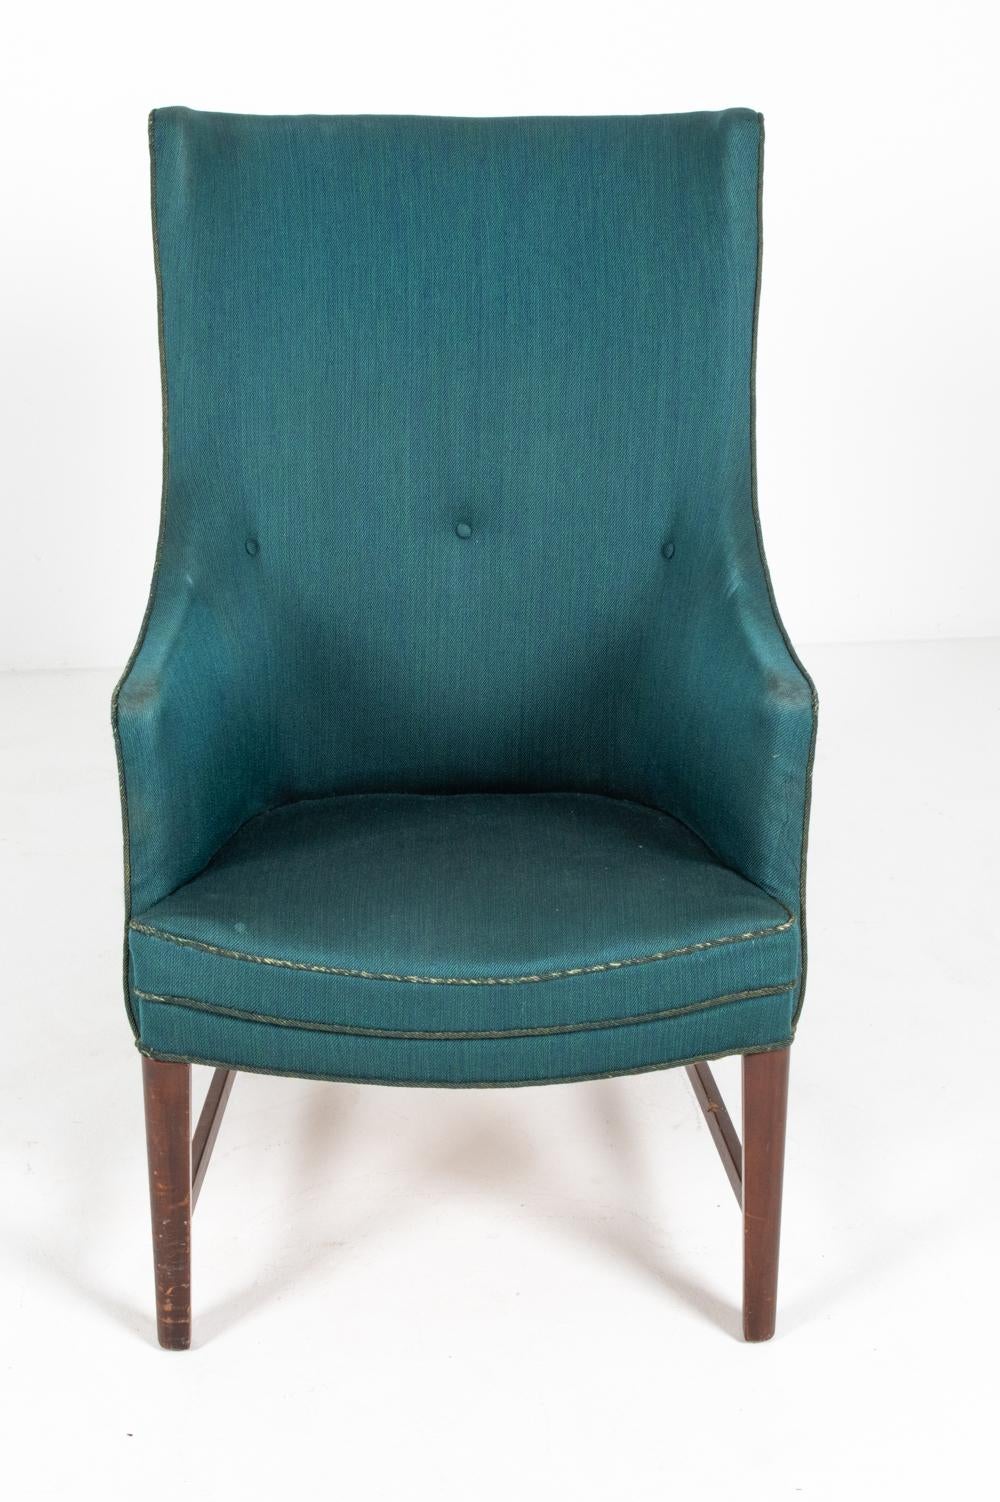 Frits Henningsen Danish Highback Lounge Chair, c. 1940's For Sale 1